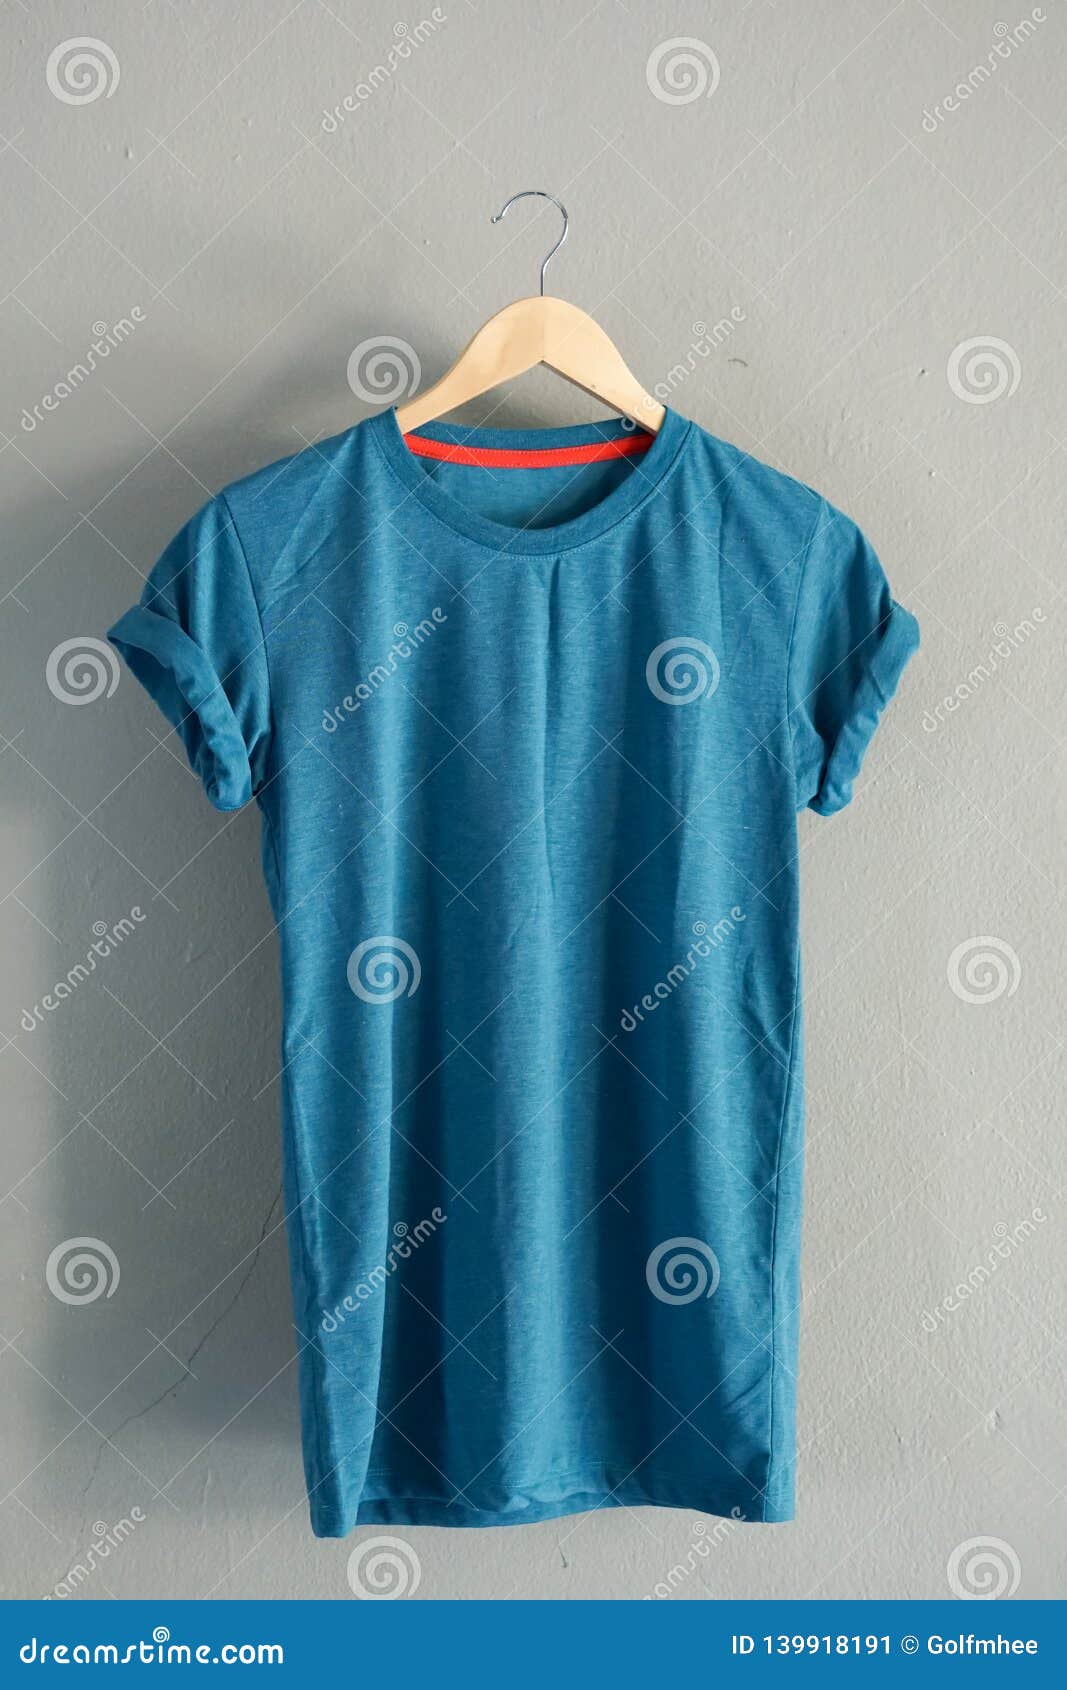 Retro Fold Blue Cotton T Shirt Clothes Mock Up Template On Grunge White Wood Background Concept For Retail Dress Shop Backdrop Stockbild Bild Von Clothes Concept